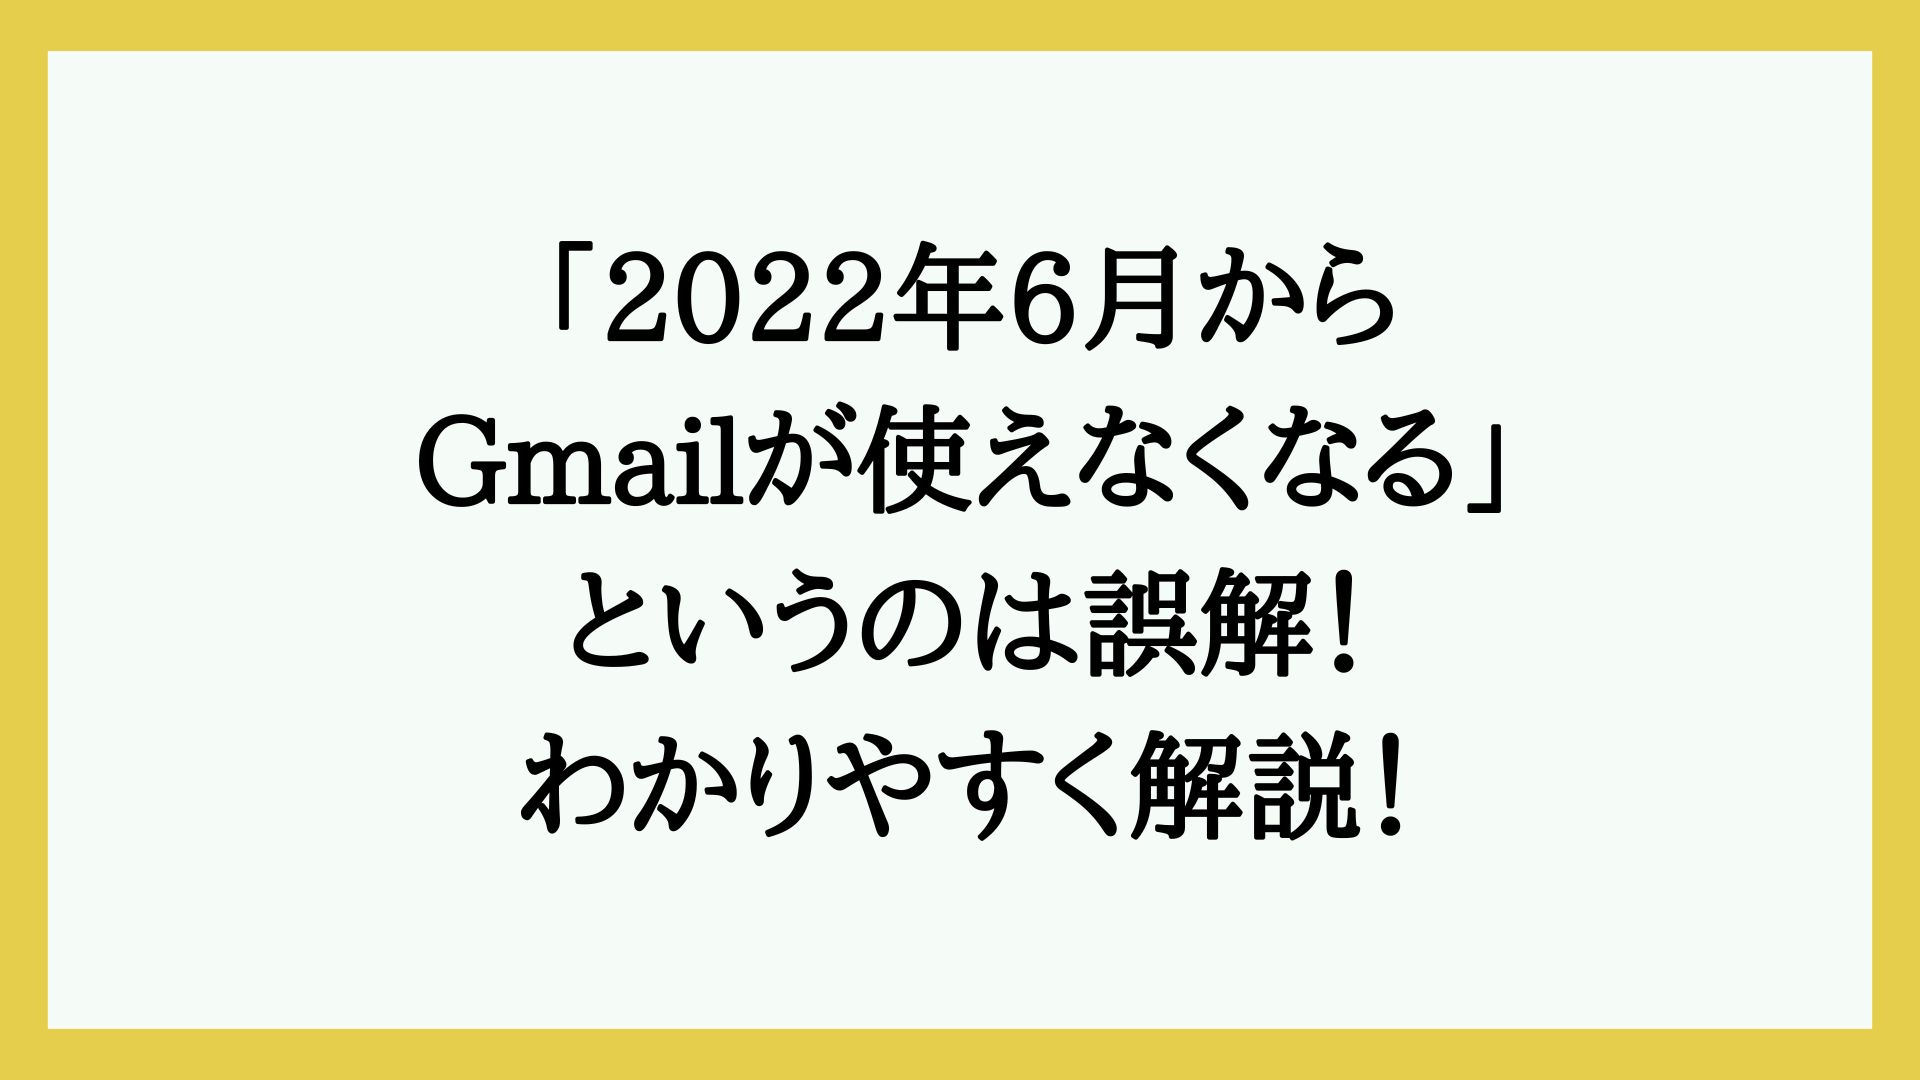 gmailは2022年6月以降も使えます